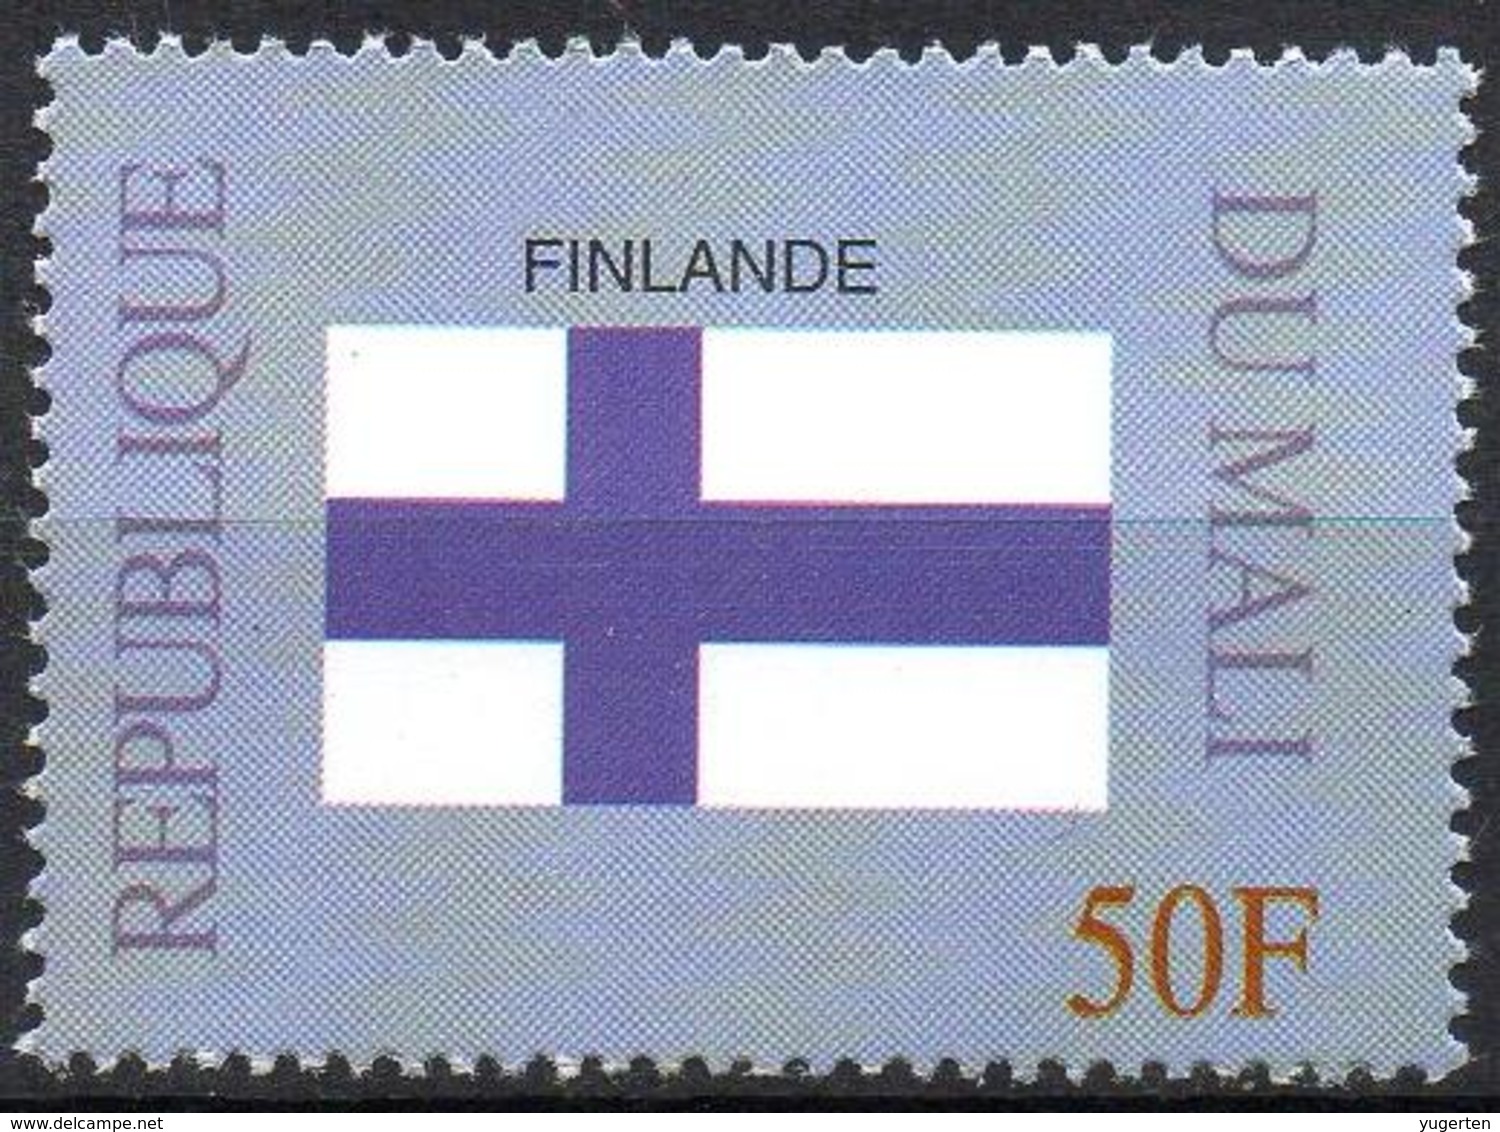 MALI 1999 - 1v - MNH** - Flag Of Finland Finlande Flags Drapeaux Fahnen Bandiere Banderas флаги - Francobolli